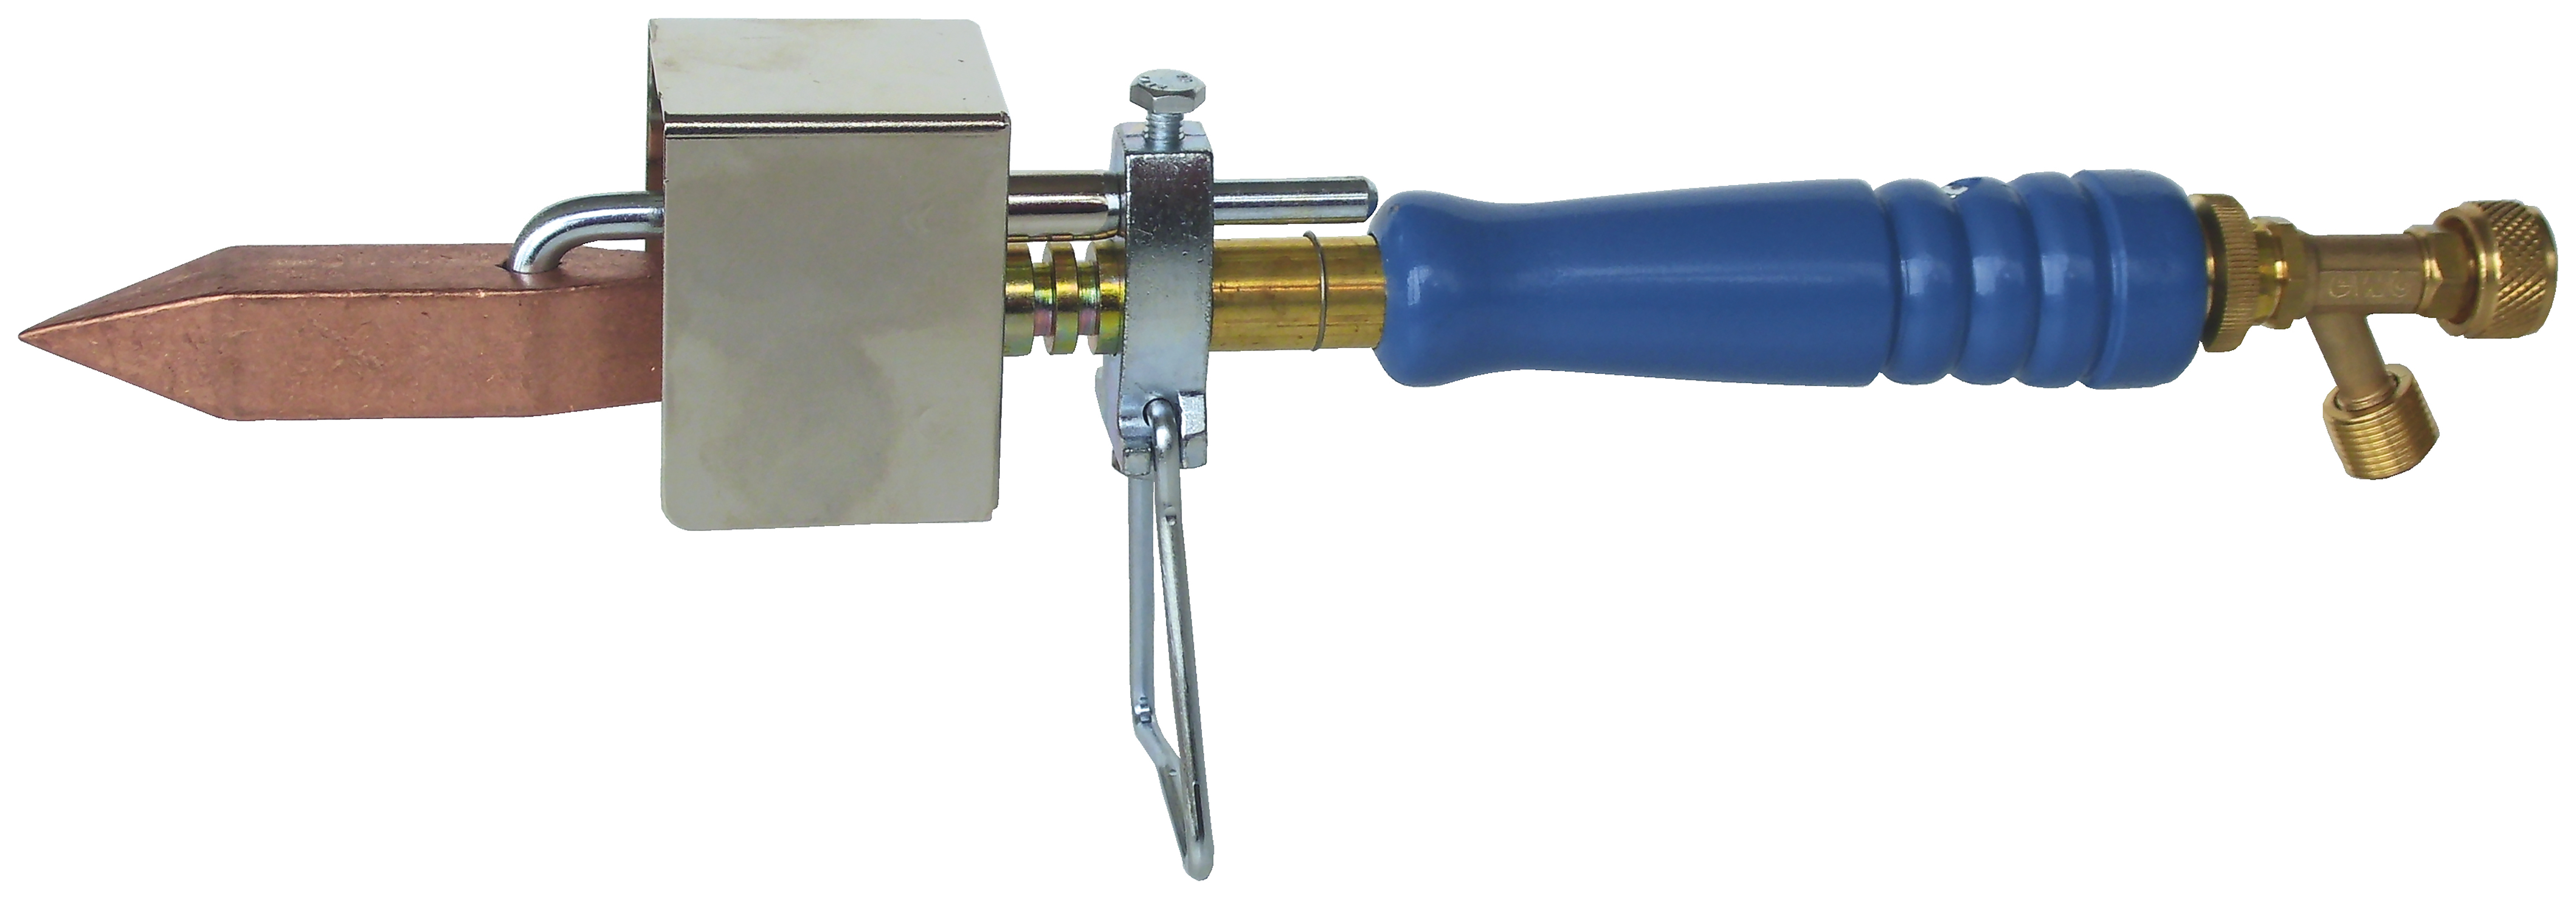 Soldering iron, soldering copper tip, G⅜ LH, burner ins. incl. protective cover, piston bracket, handle piece (wooden), air slide